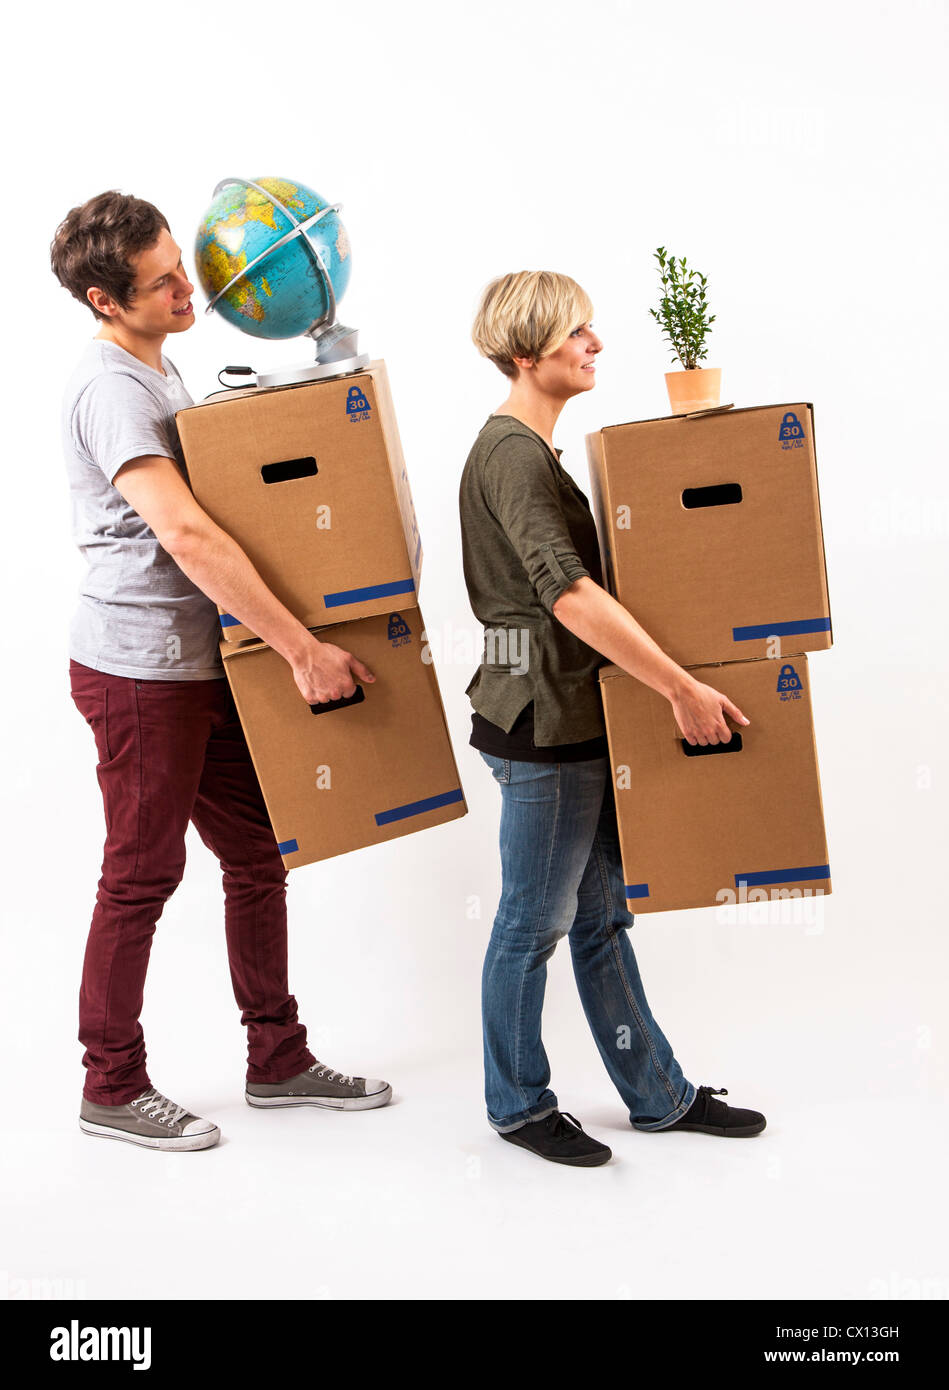 Symbolfoto Umzug, Auszug, umziehen. Junges Paar trägt Umzugskartons, Zimmerpflanze und Globus. Umzugskisten aus Pappkarton. Stock Photo